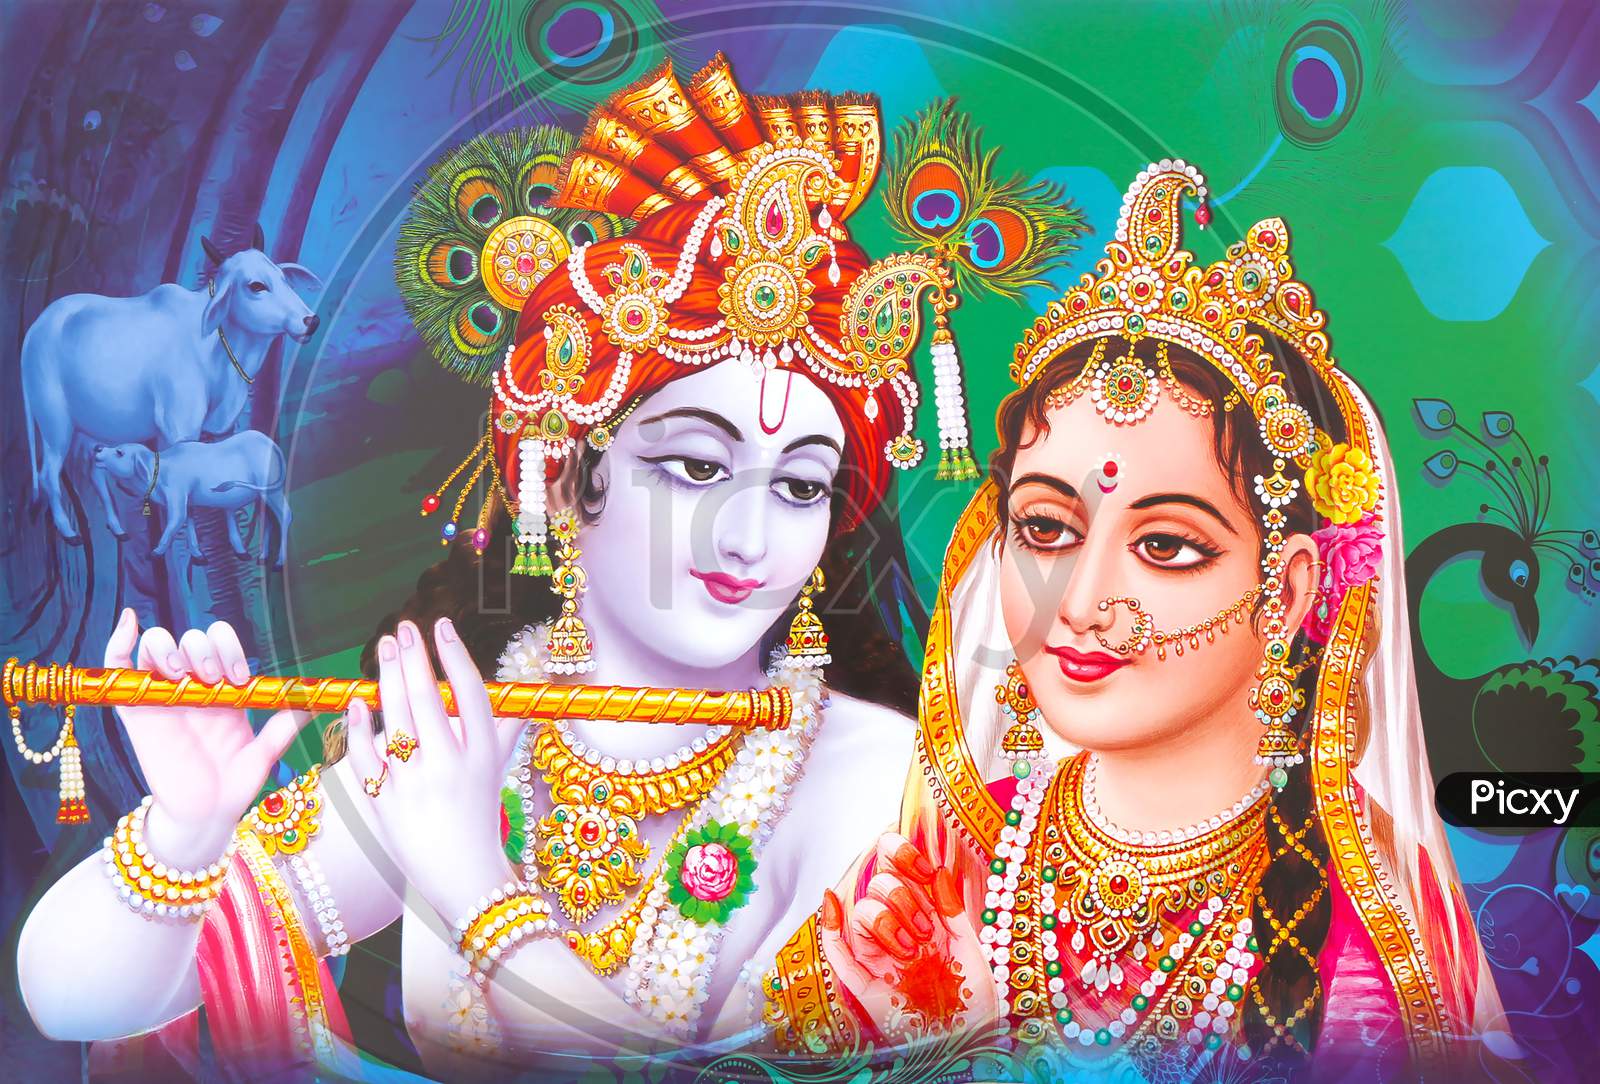 Image Of Hindu Lord Radha Krishna Texture Wallpaper Background FO677525 Picxy